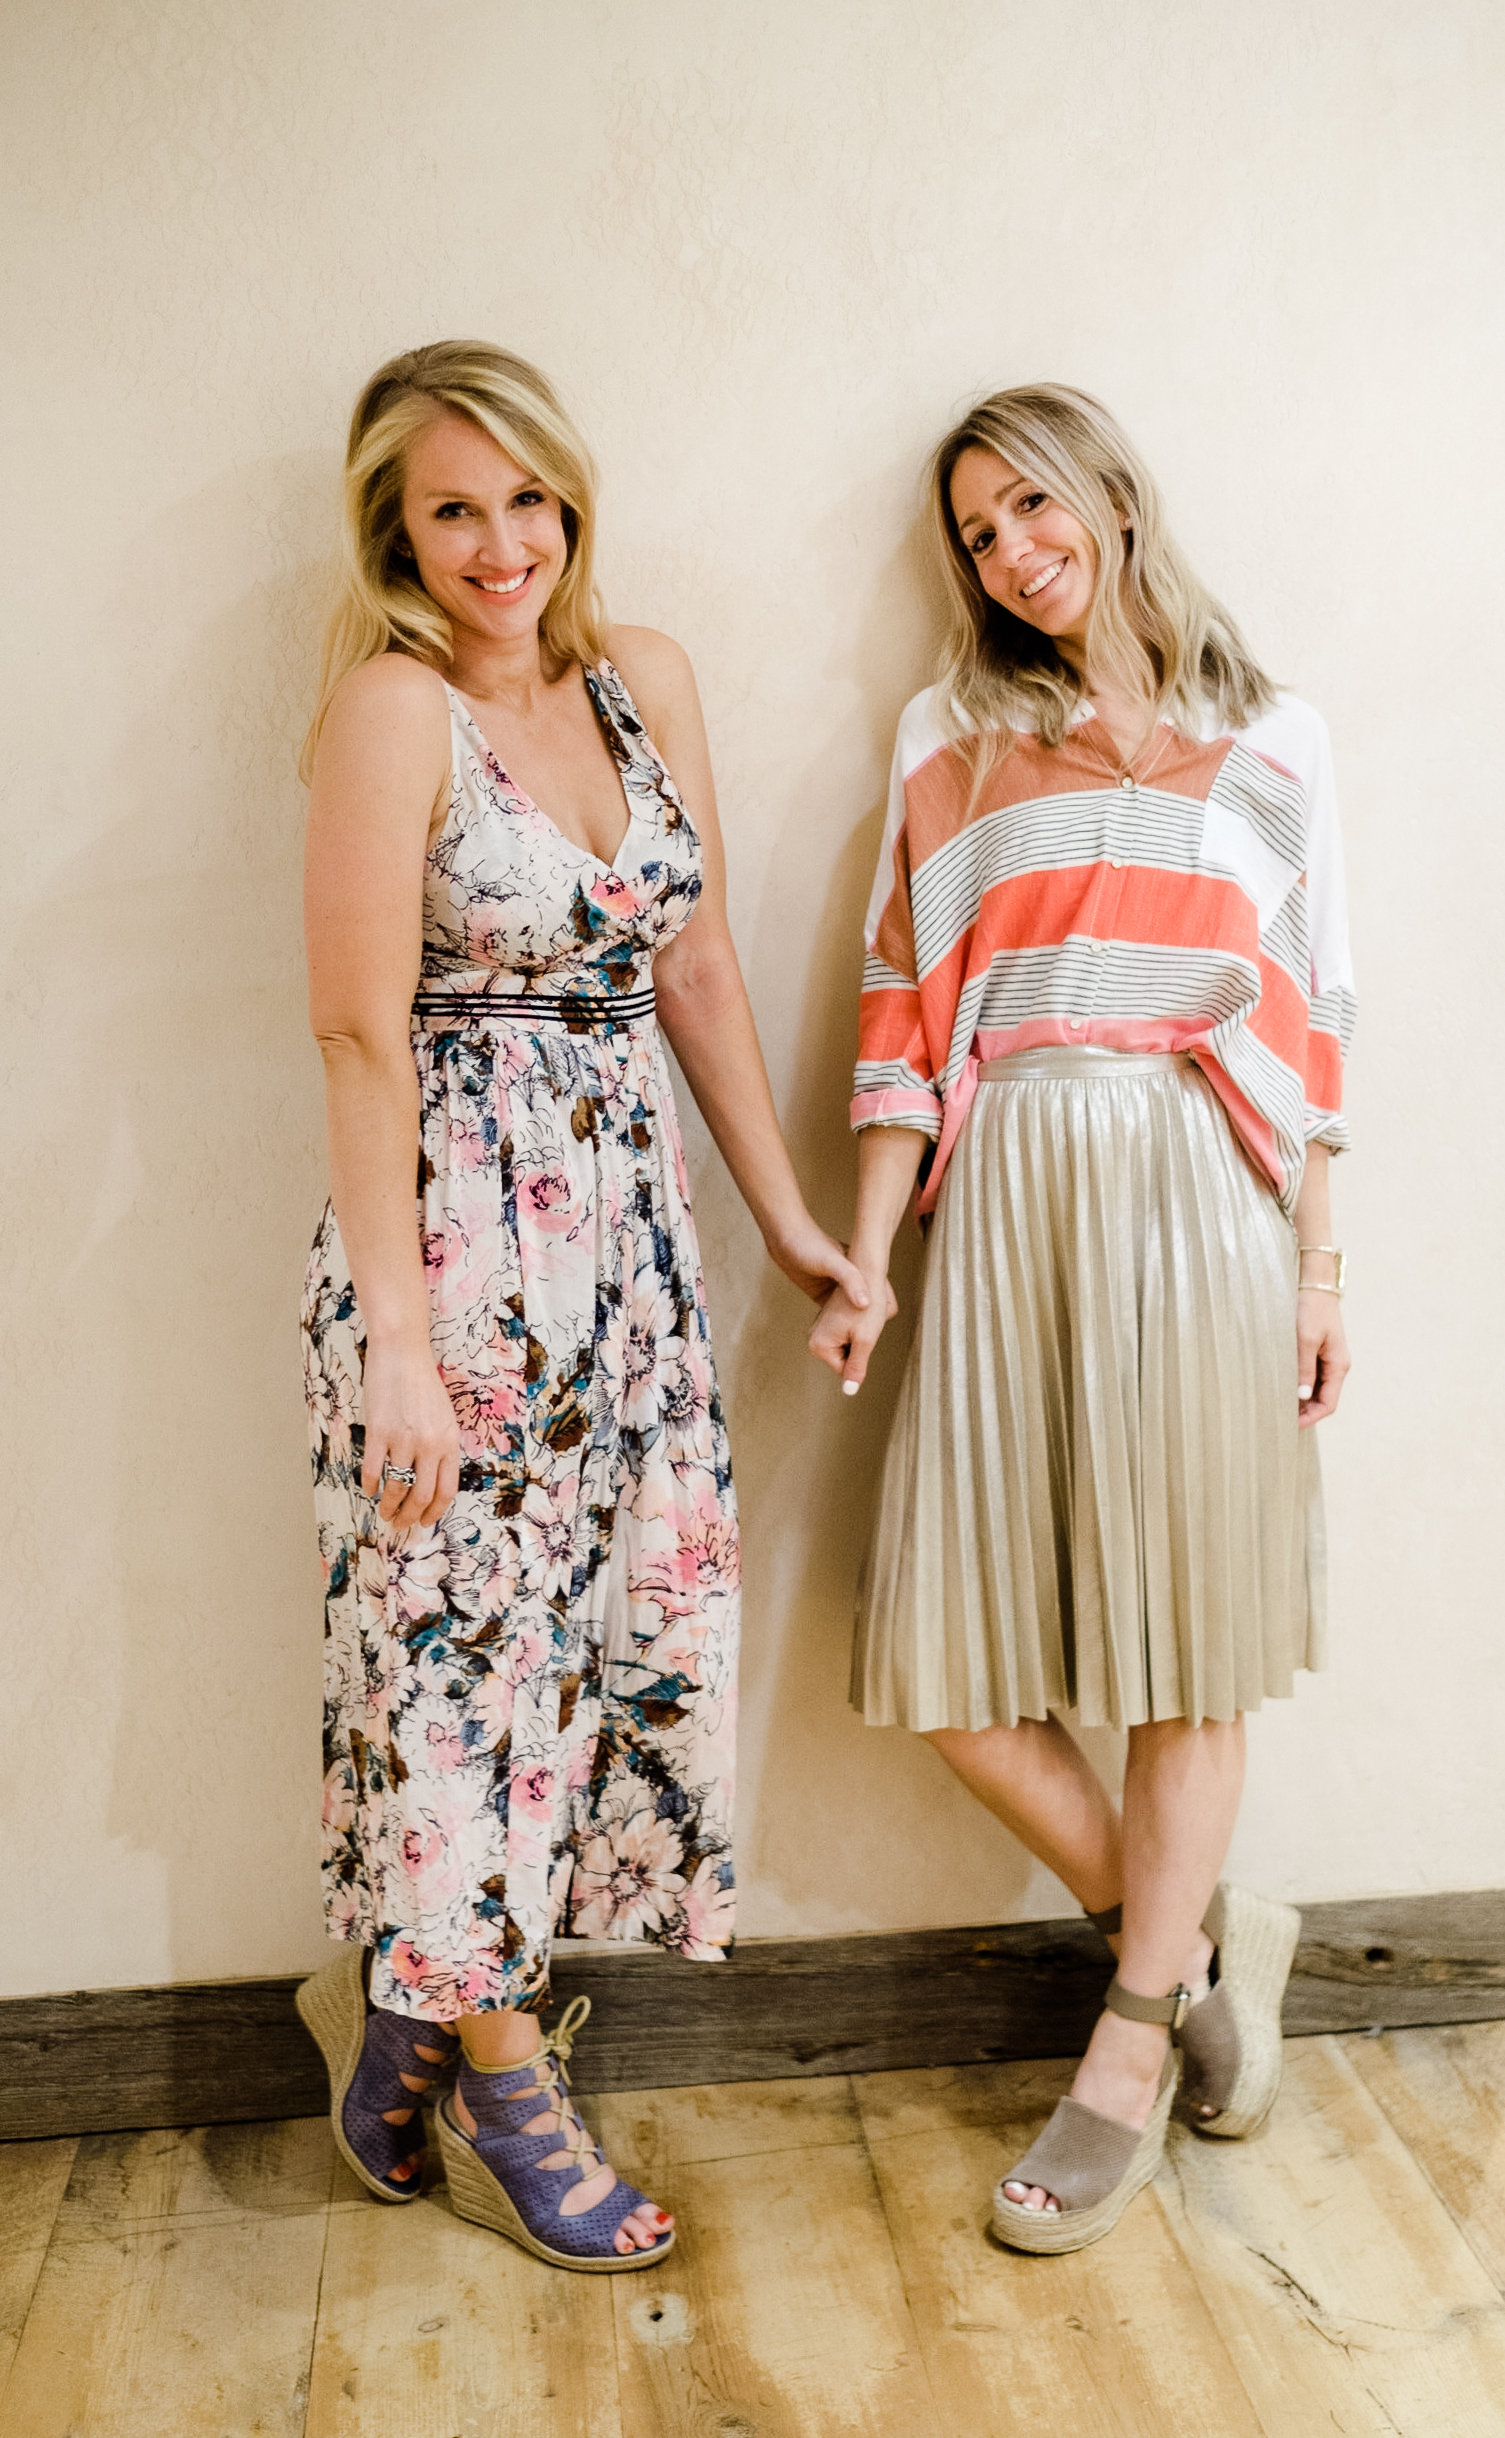 Summer Fashion with Avalon Insider by Atlanta blogger Jessica of Happily Hughes